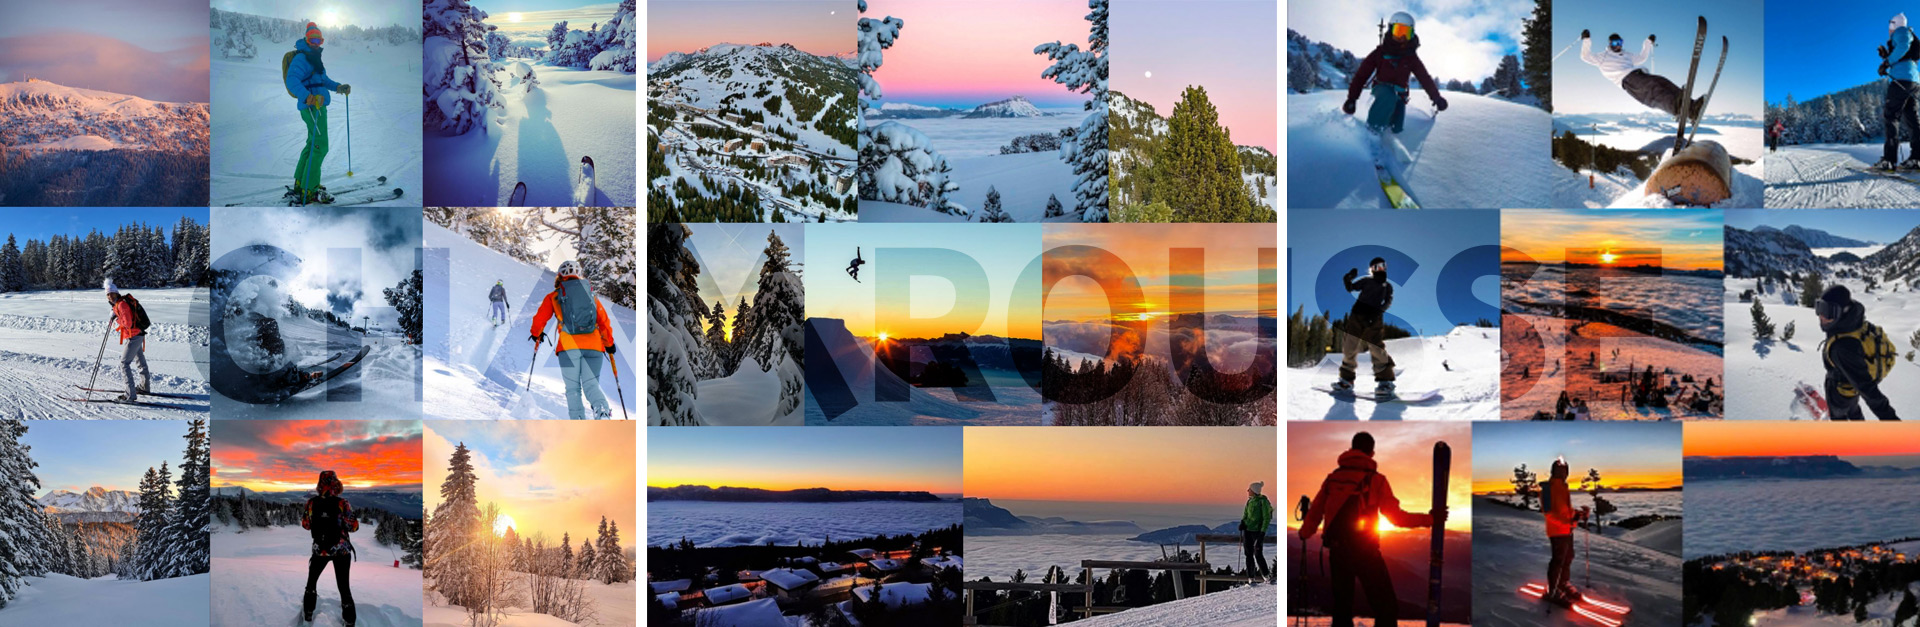 Chamrousse instagram photo winter 2022 picture mountain ski resort grenoble isere french alps france - © DR